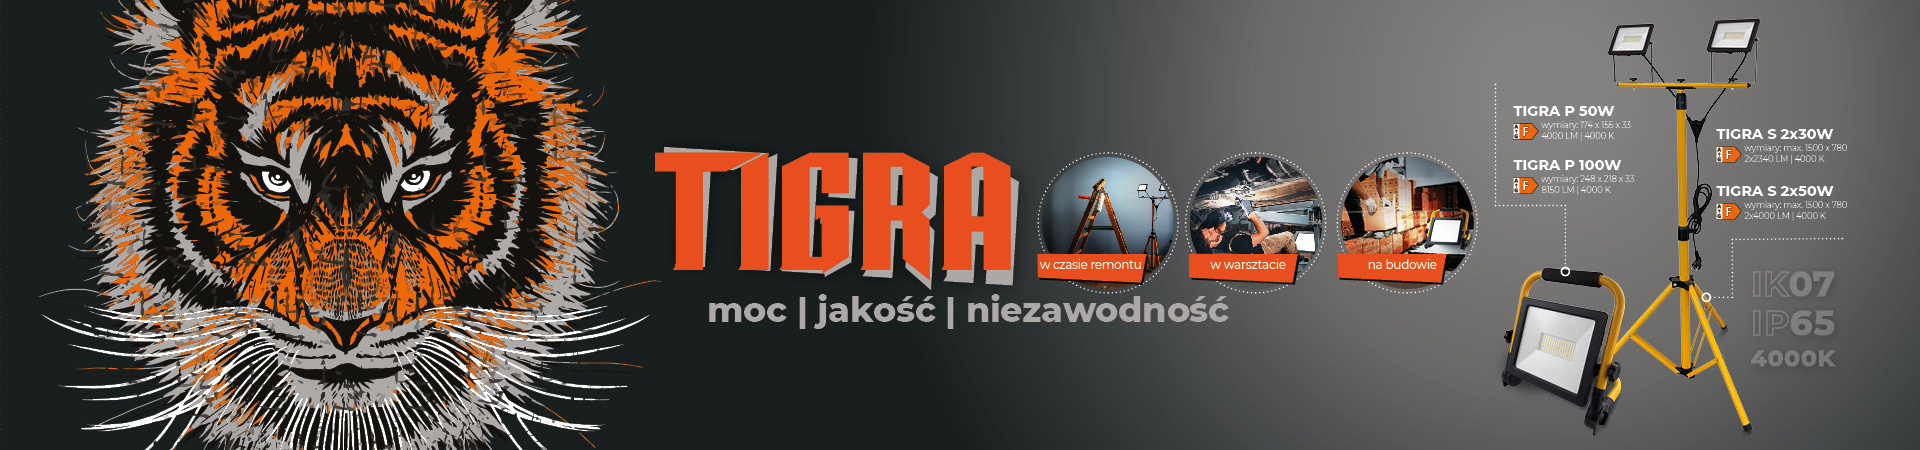 Tigra_pl